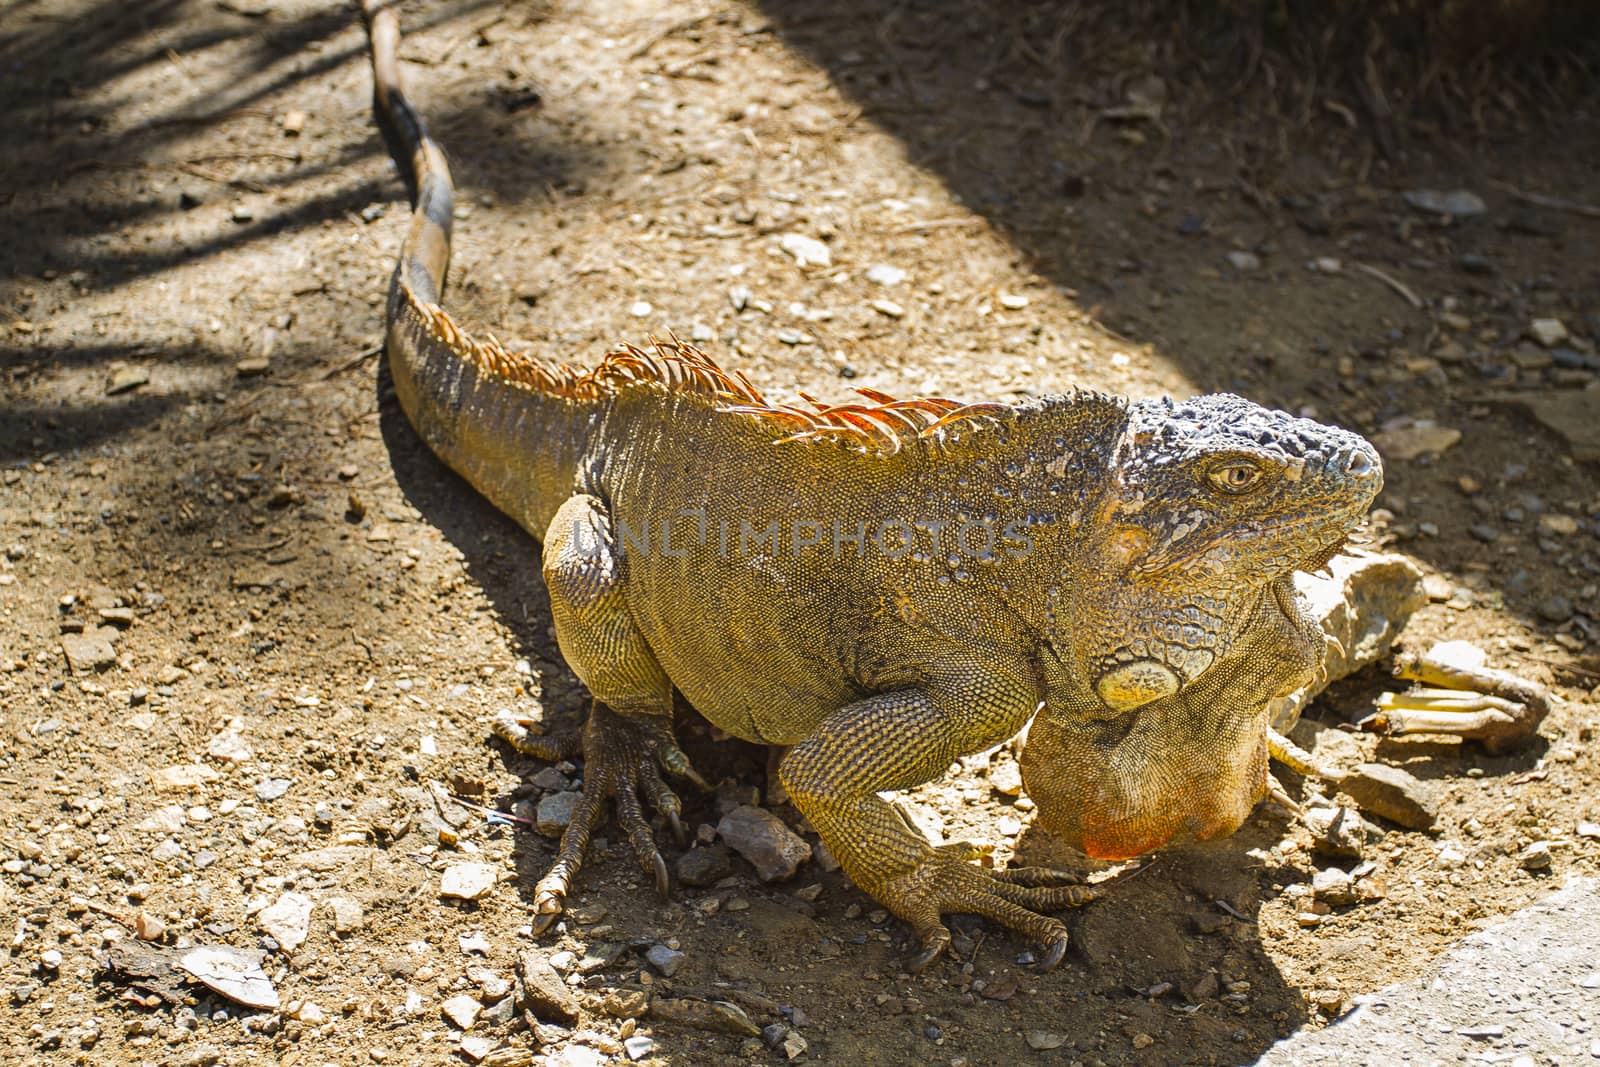 Large brown iguana sunbathing on rocky ground